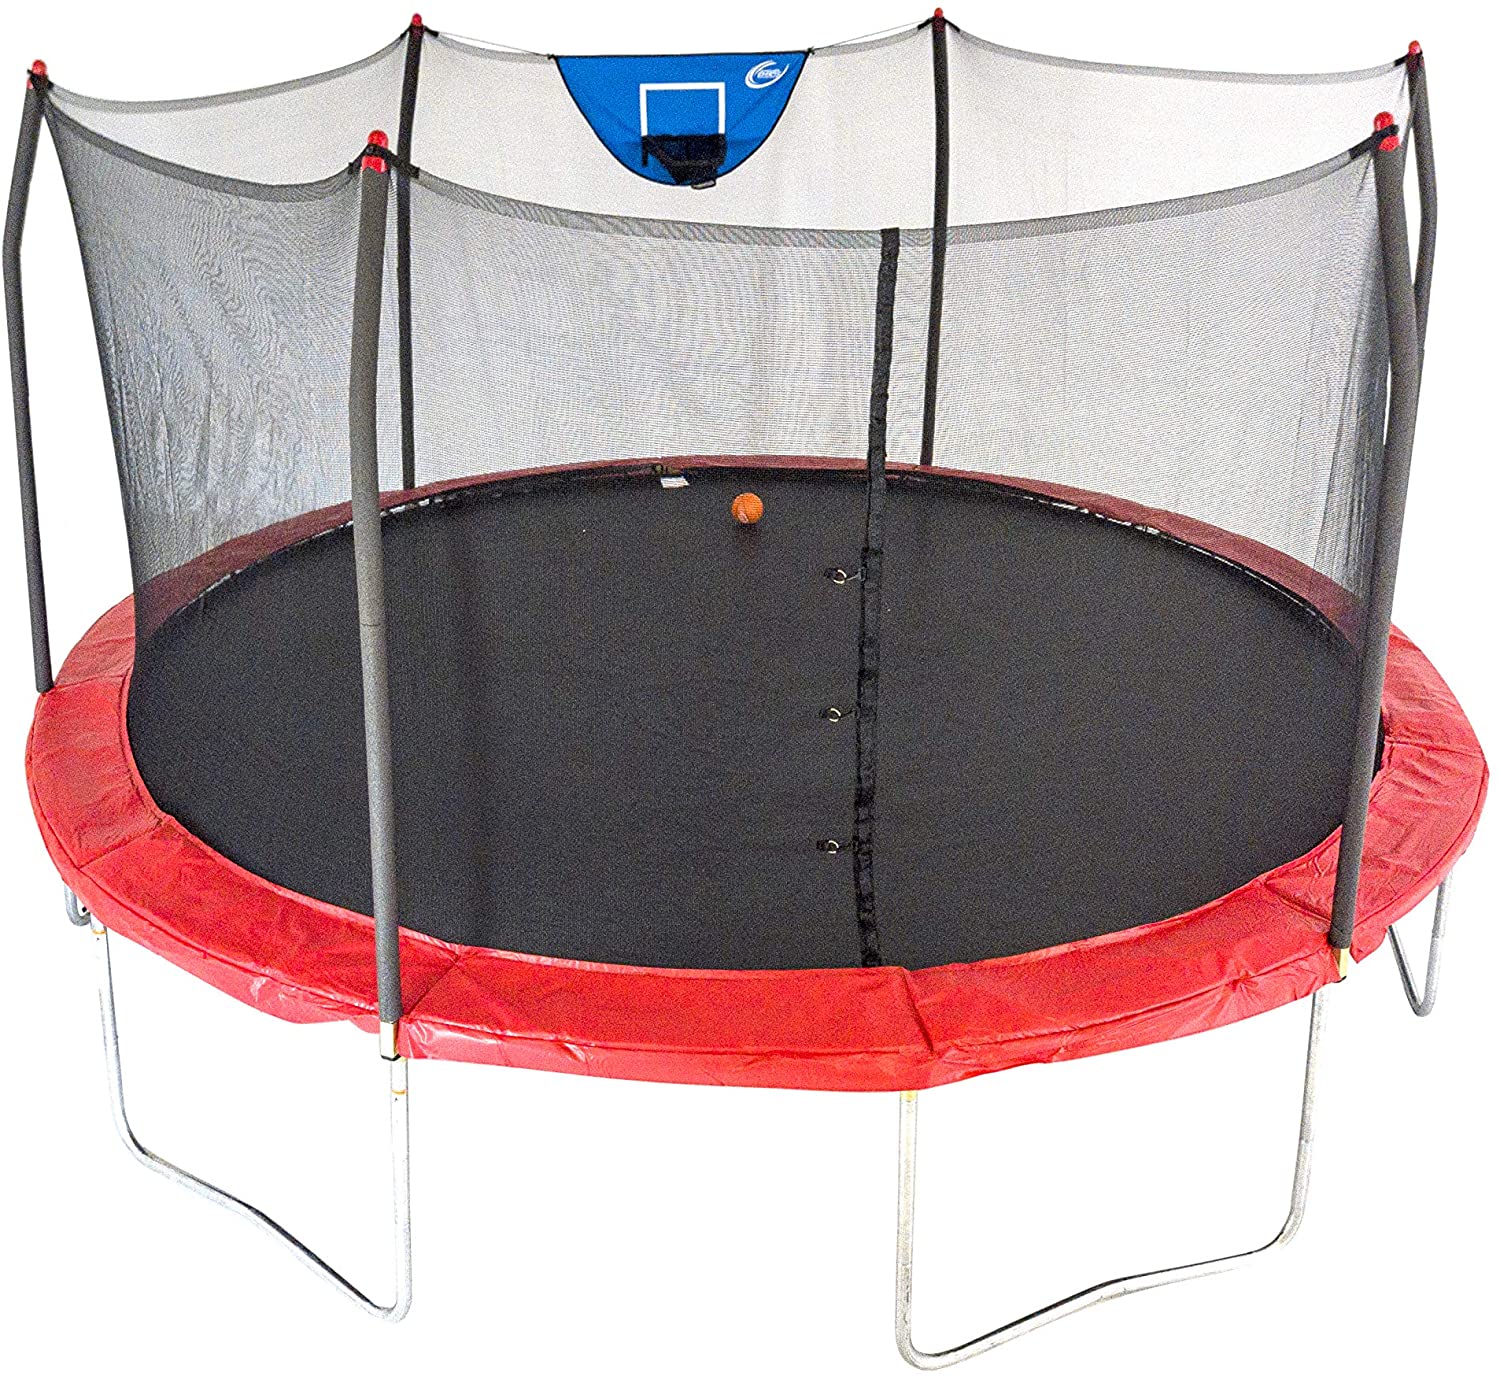 Skywalker Trampolines 15 Foot Jump N Dunk Round Trampoline with Enclosure-Basketball